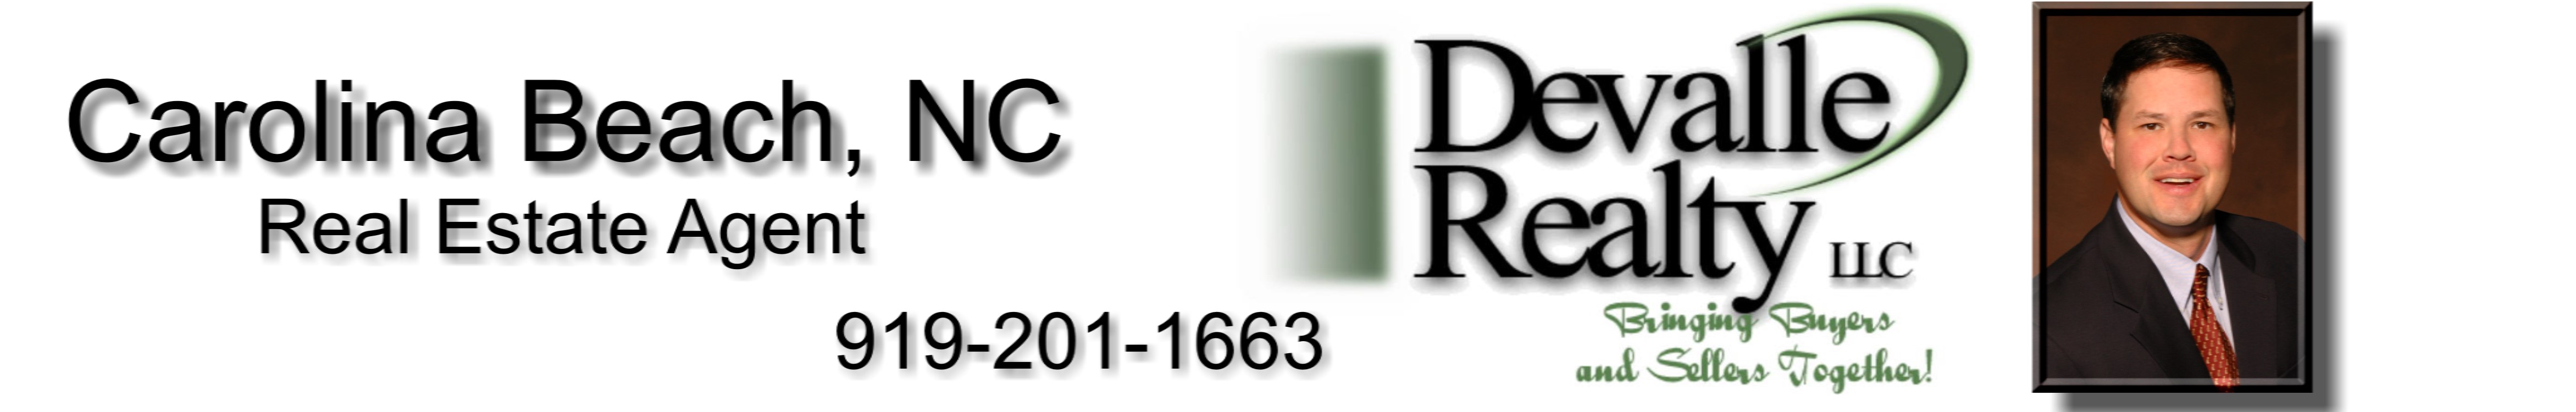 Devalle Realty Carolina Beach Real Estate Agent header